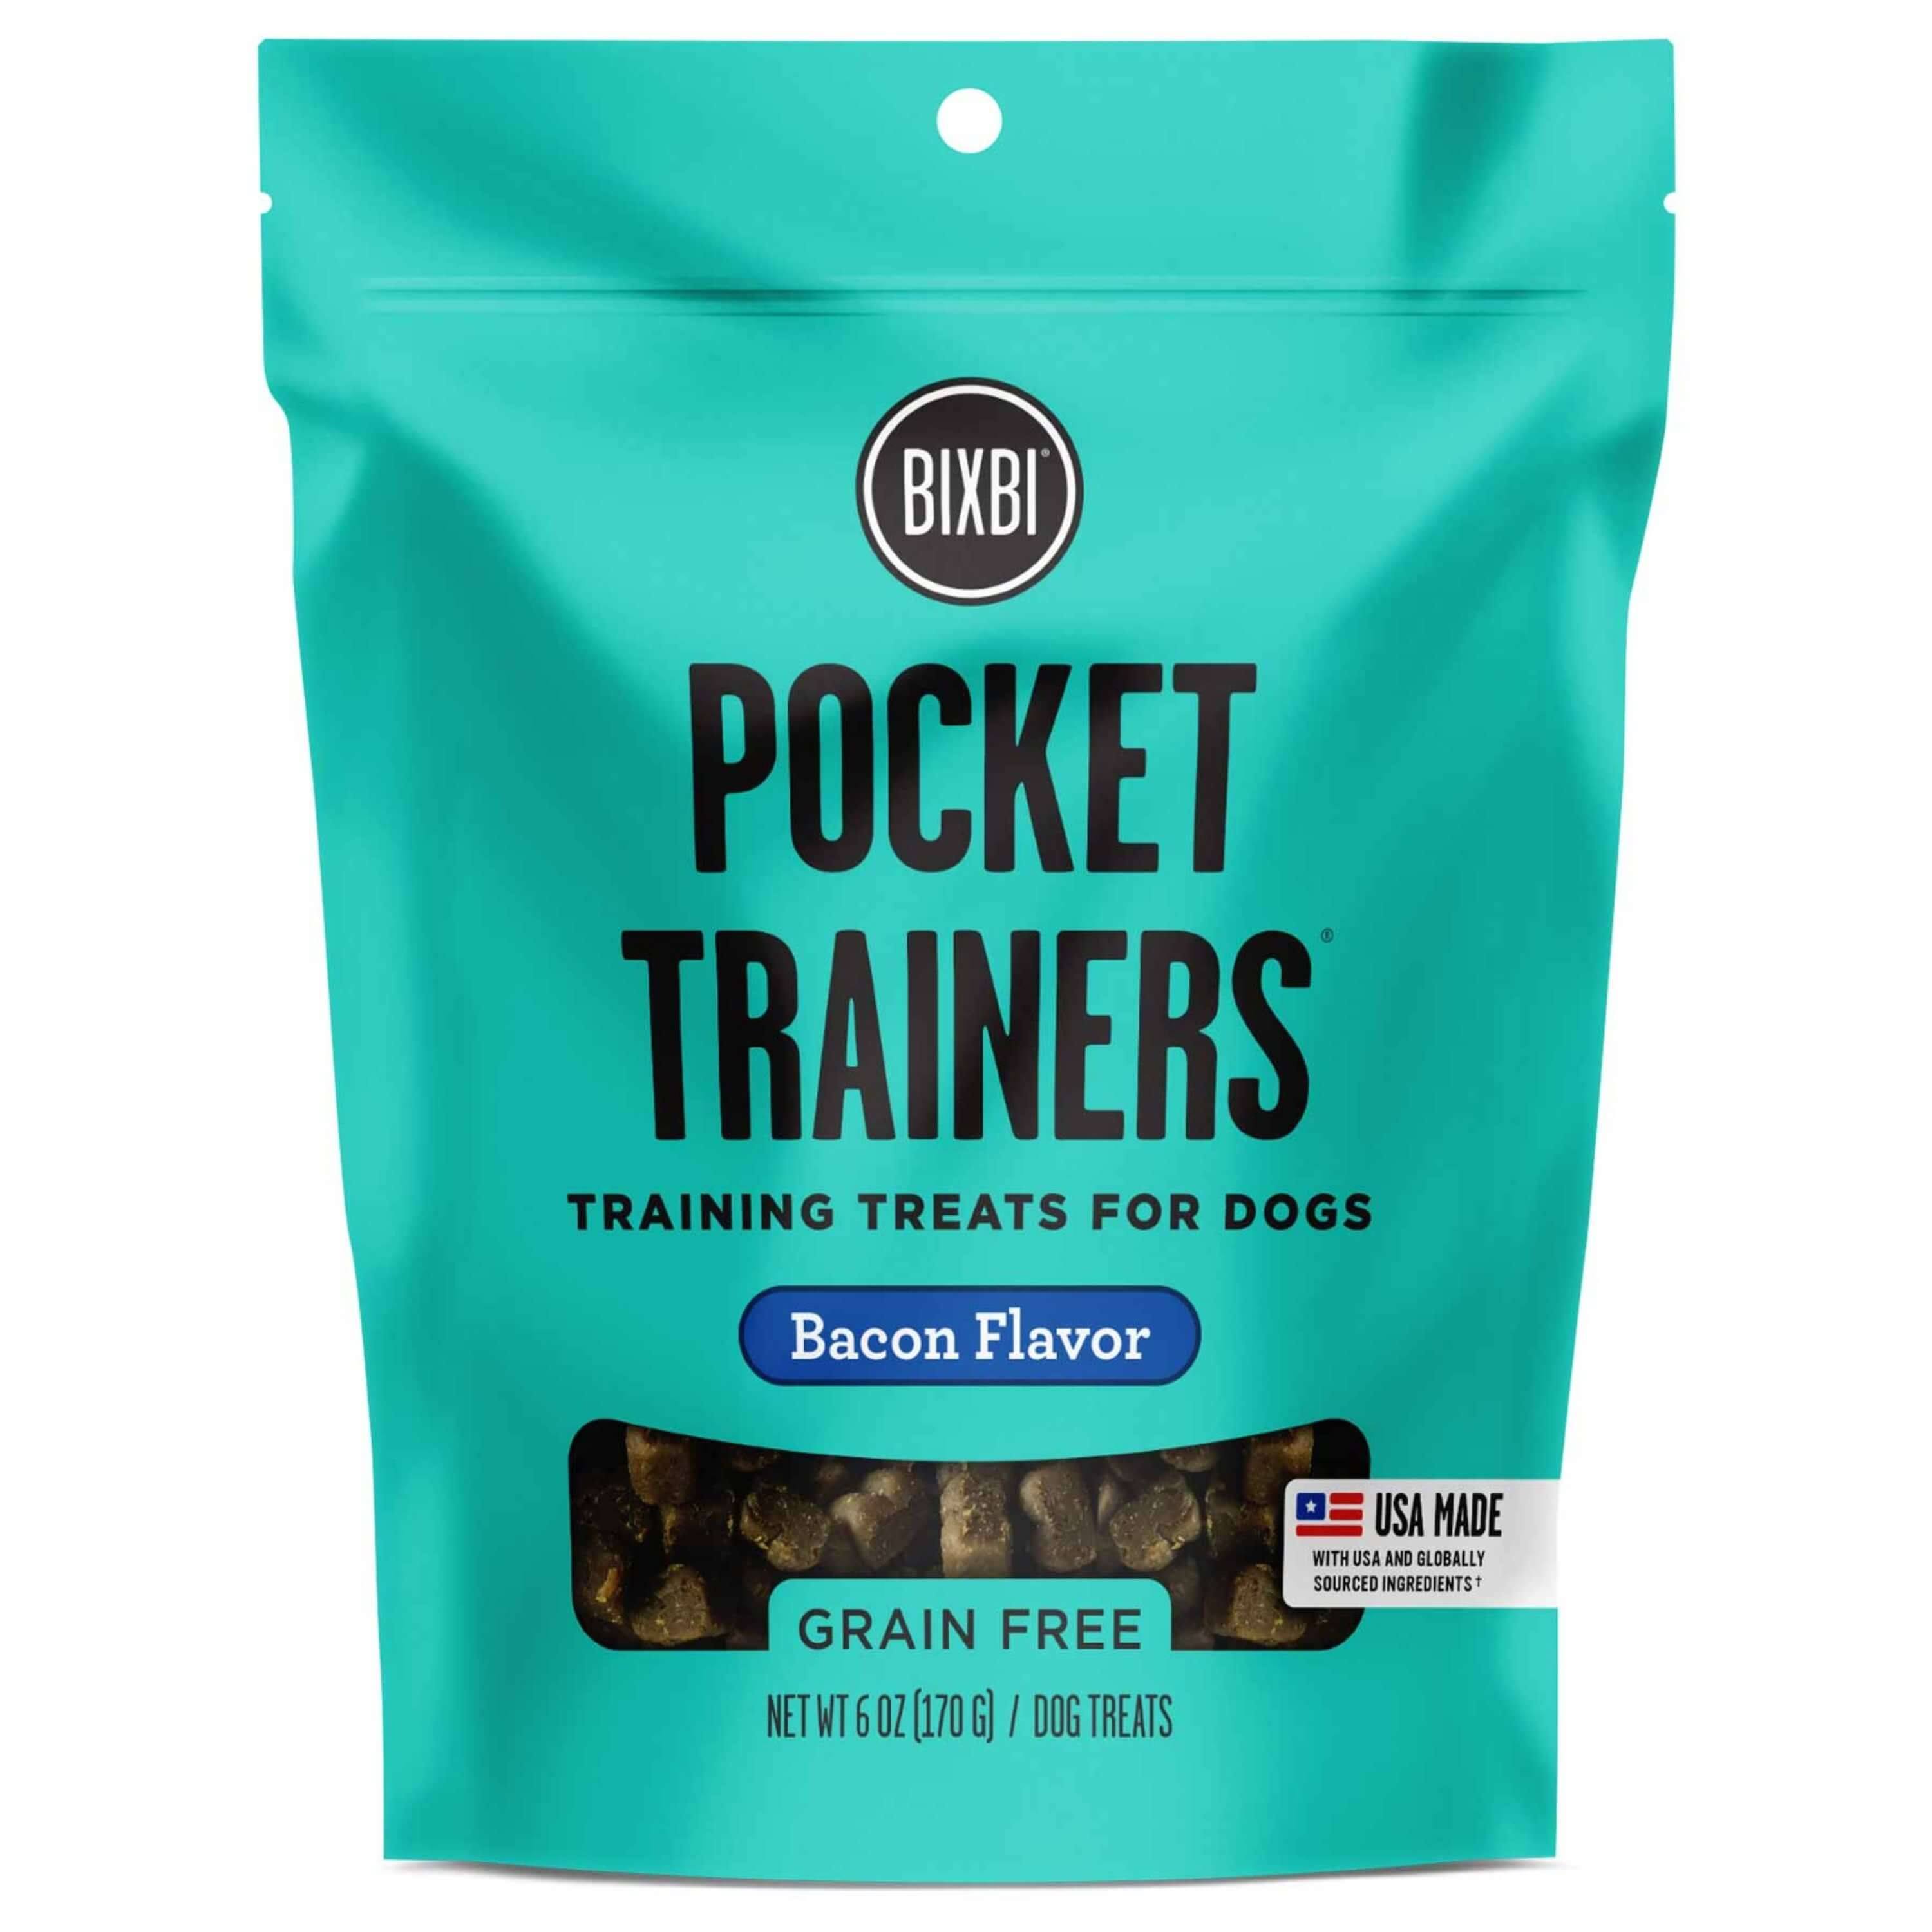 BIXBI Pocket Trainers, Bacon (6 oz, 1 Pouch) - Small Training Treats for Dogs...